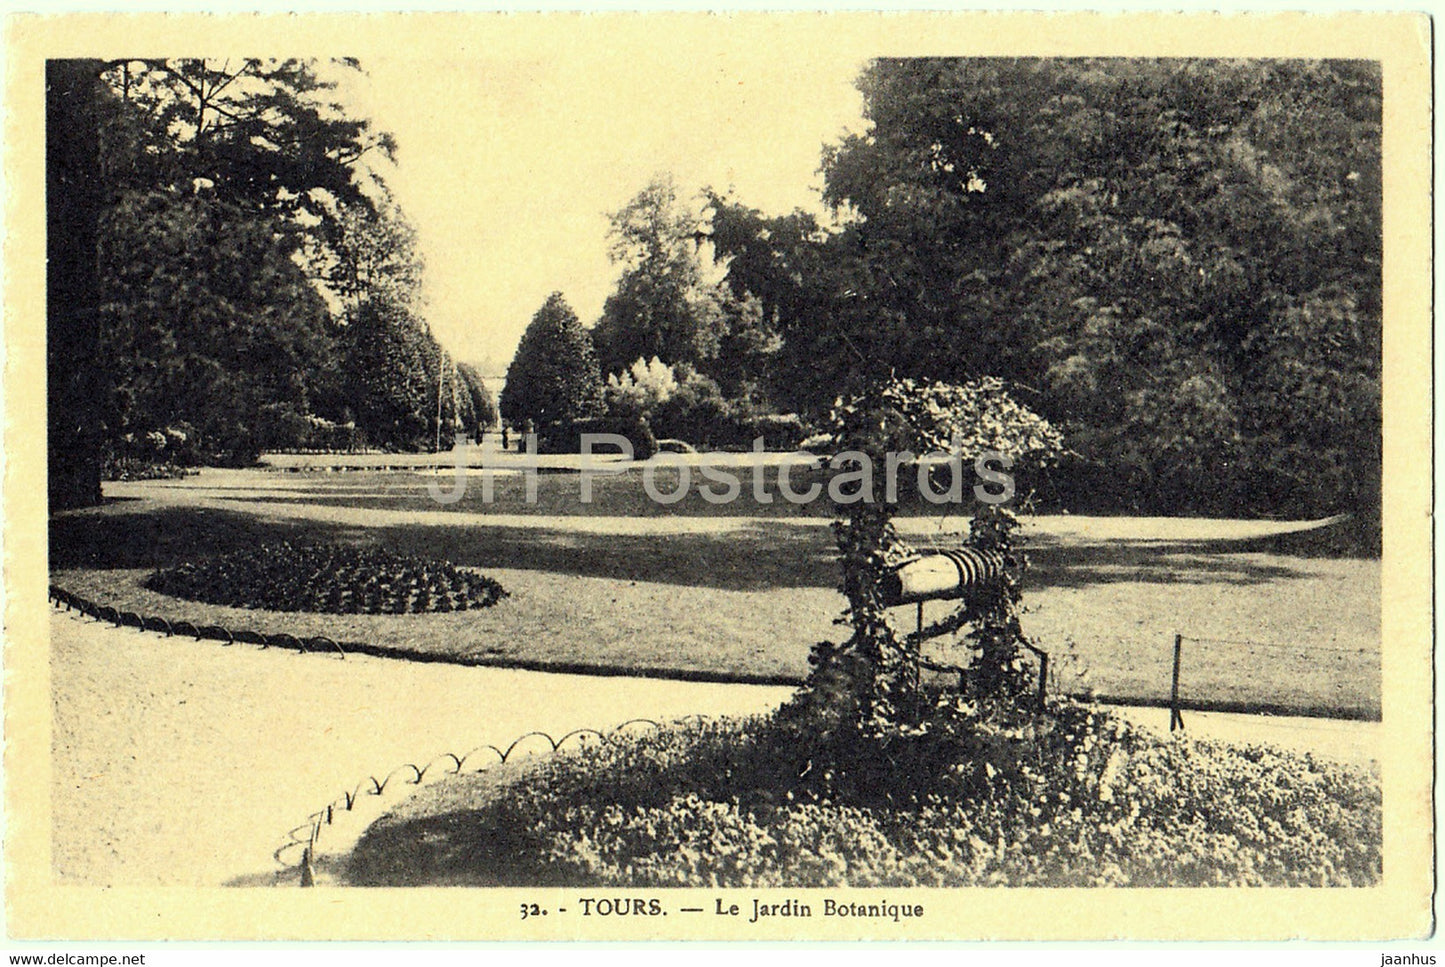 Tours - Le Jardin Botanique - 32 - old postcard - France - unused - JH Postcards